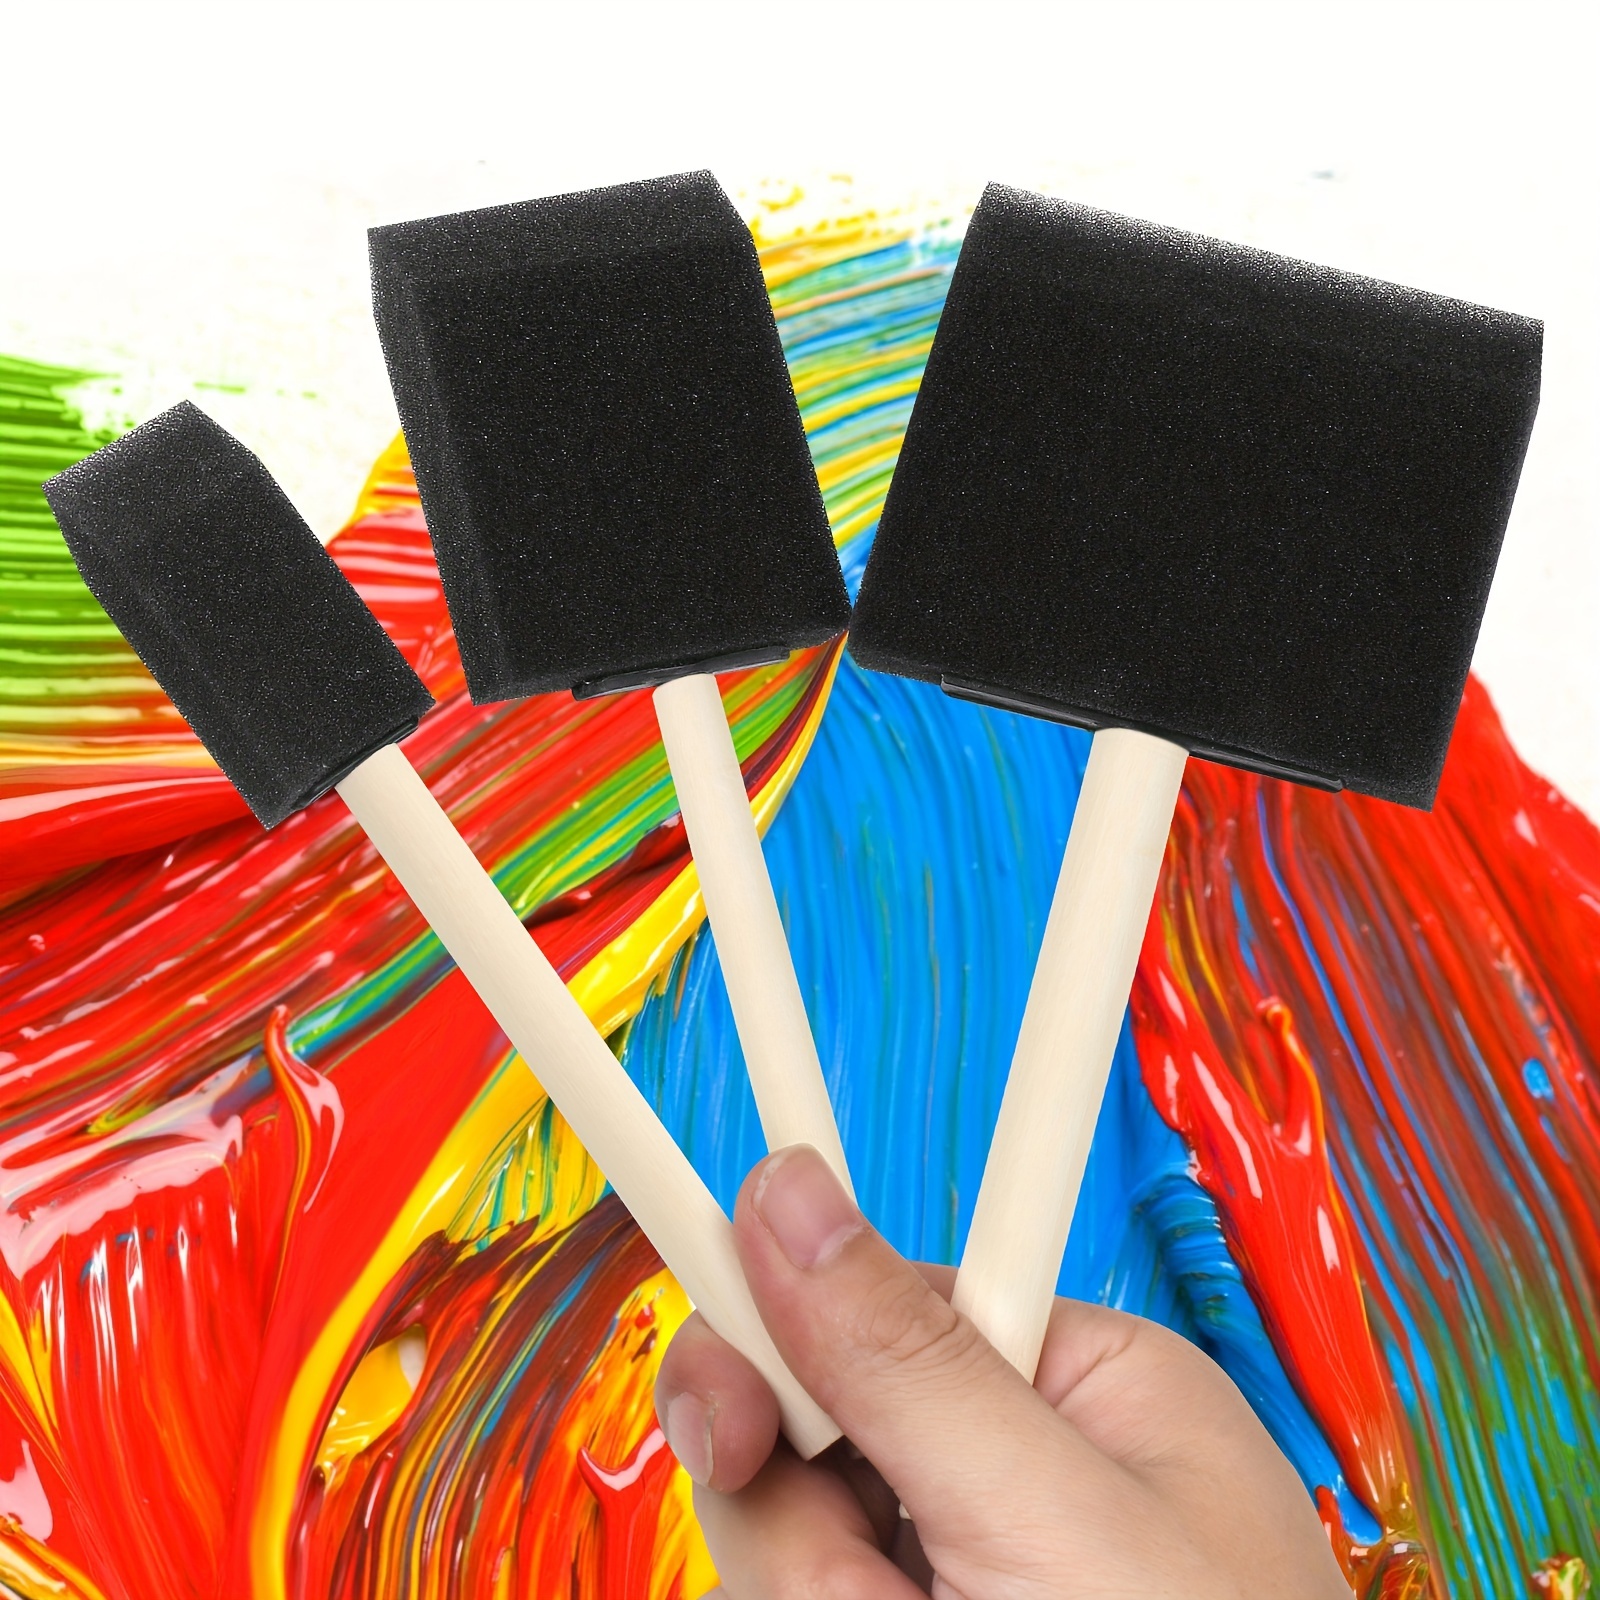 24 Pcs Foam Brush Set, Foam Paint Brushes, Wood Handle Sponge Brushes for Painting, Foam Brushes Sponge Paint Brush for Staining, Varnishes, and DIY